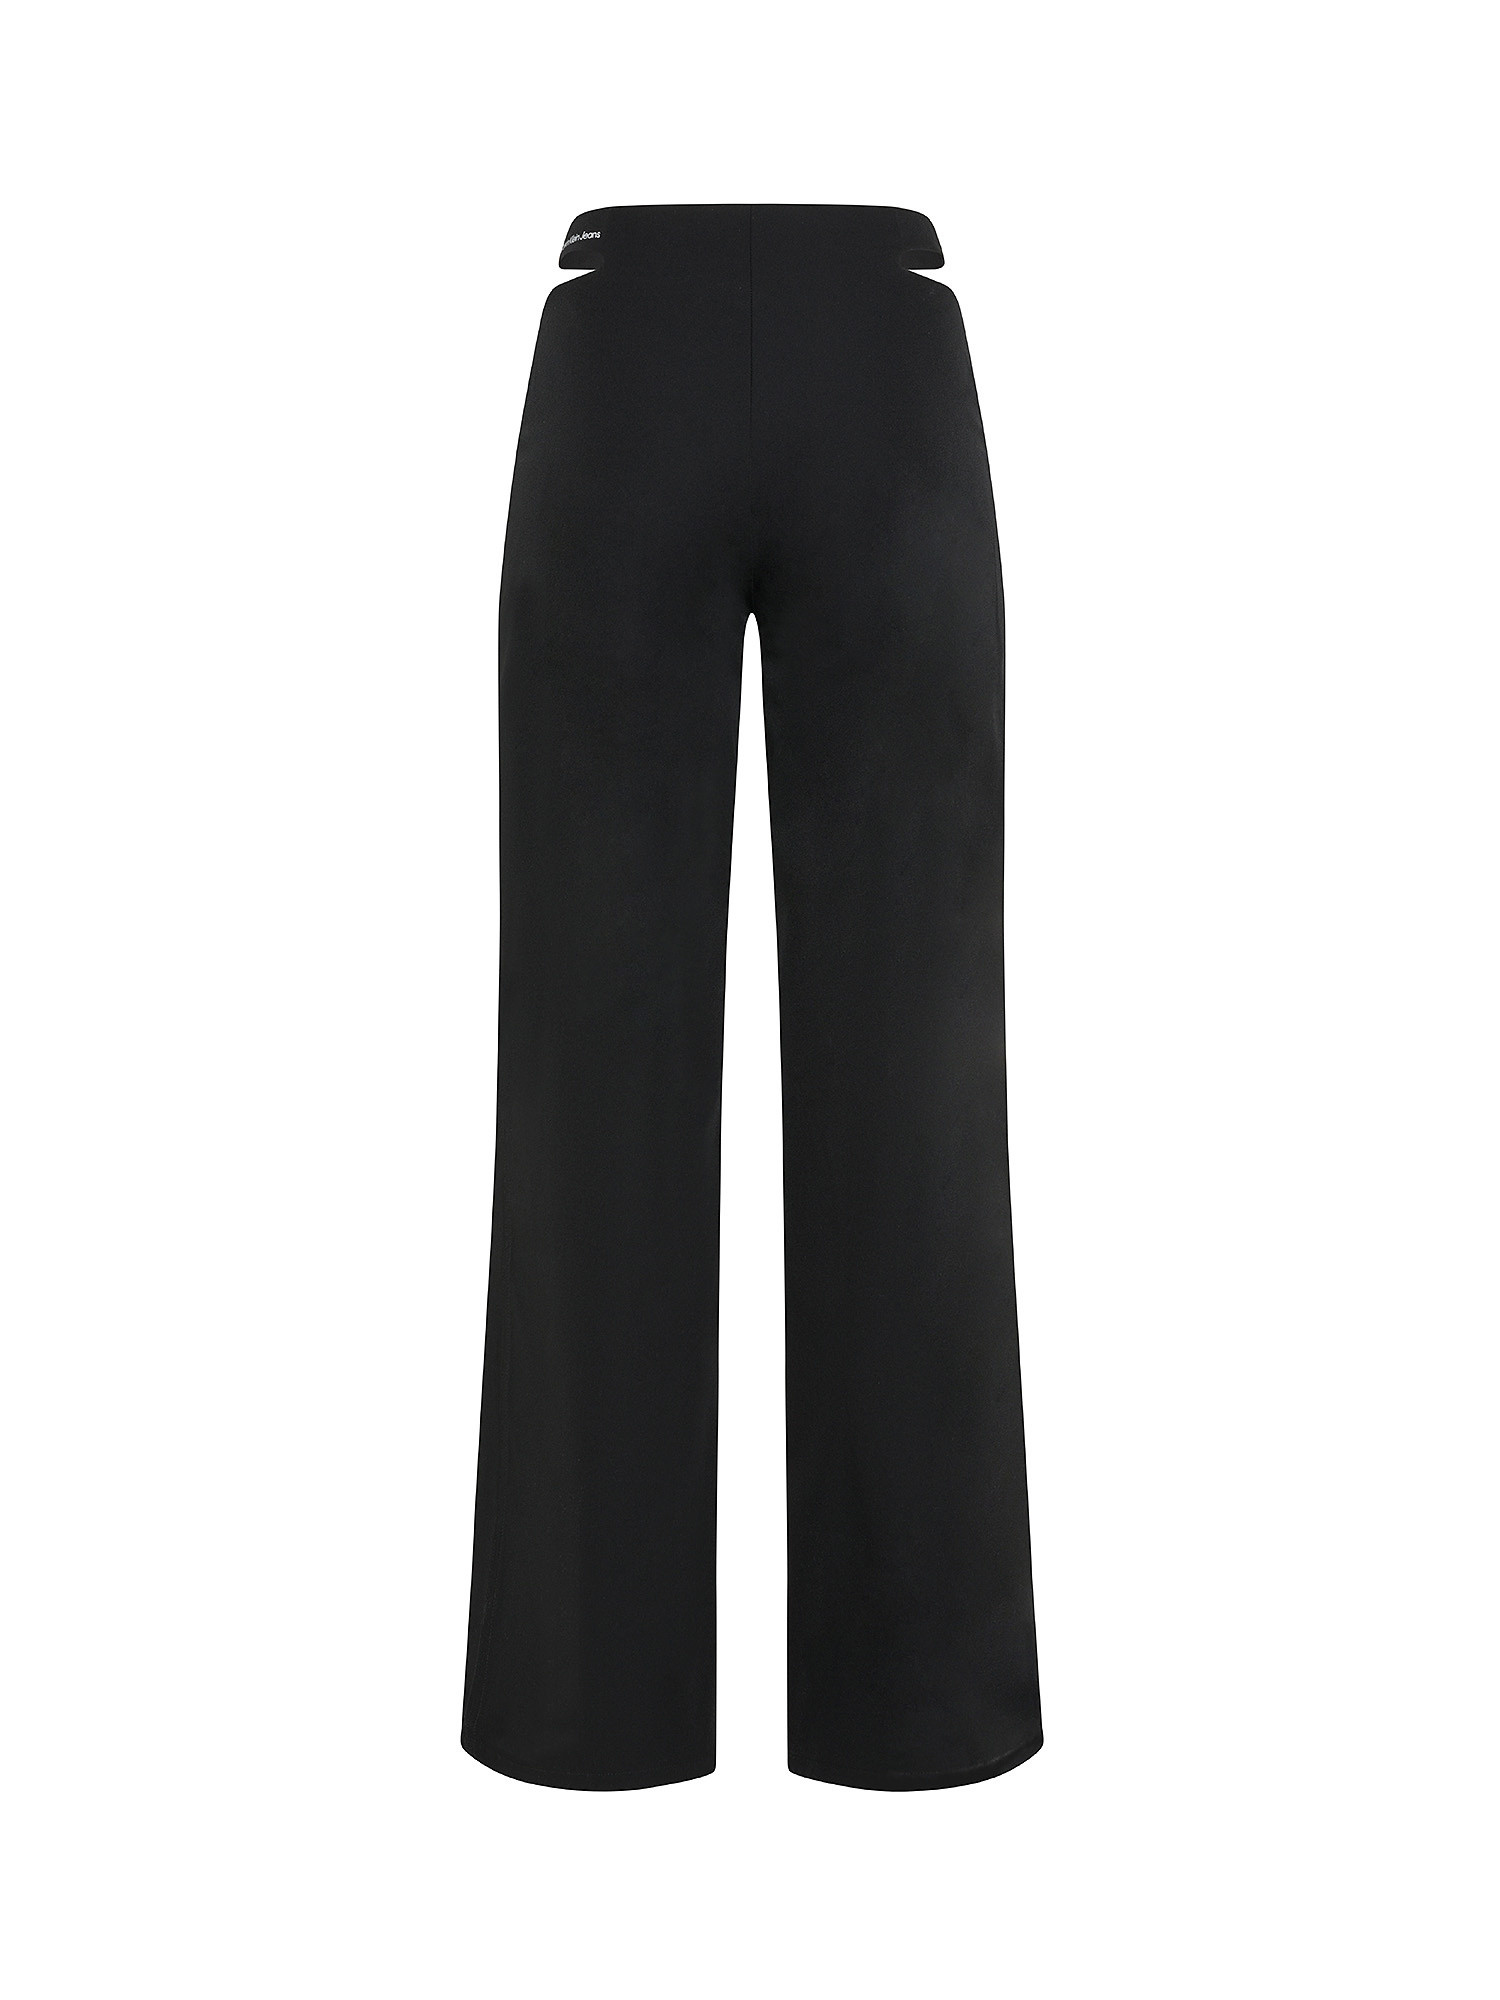 Calvin Klein Jeans - Cut Out Pants, Black, large image number 1